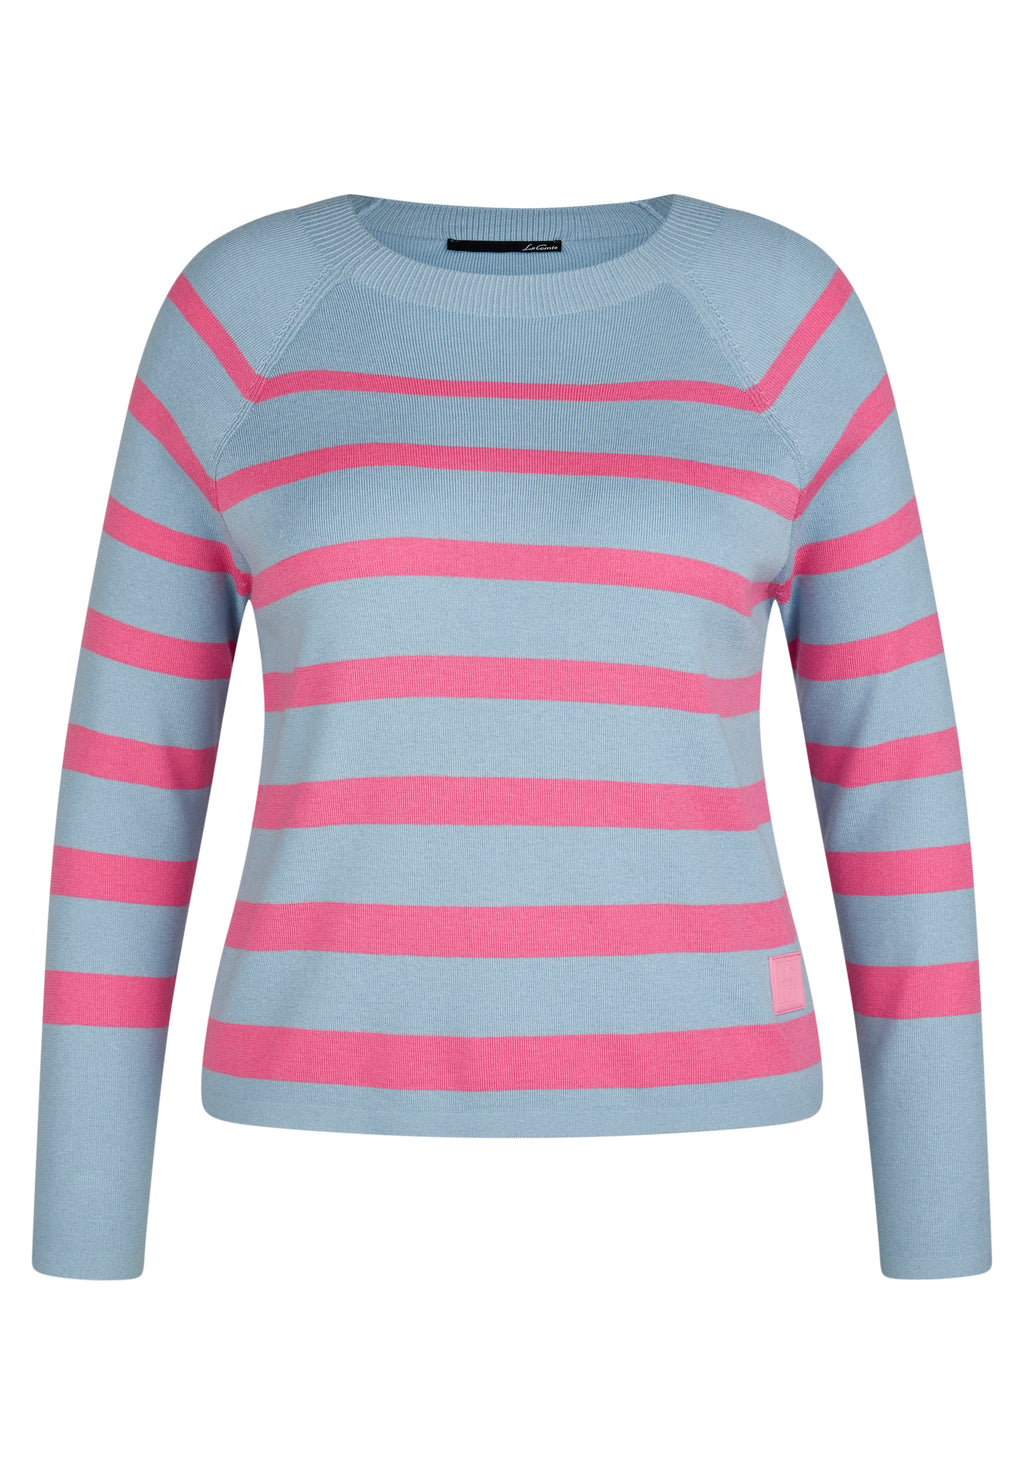 Colour splash stripe jumper